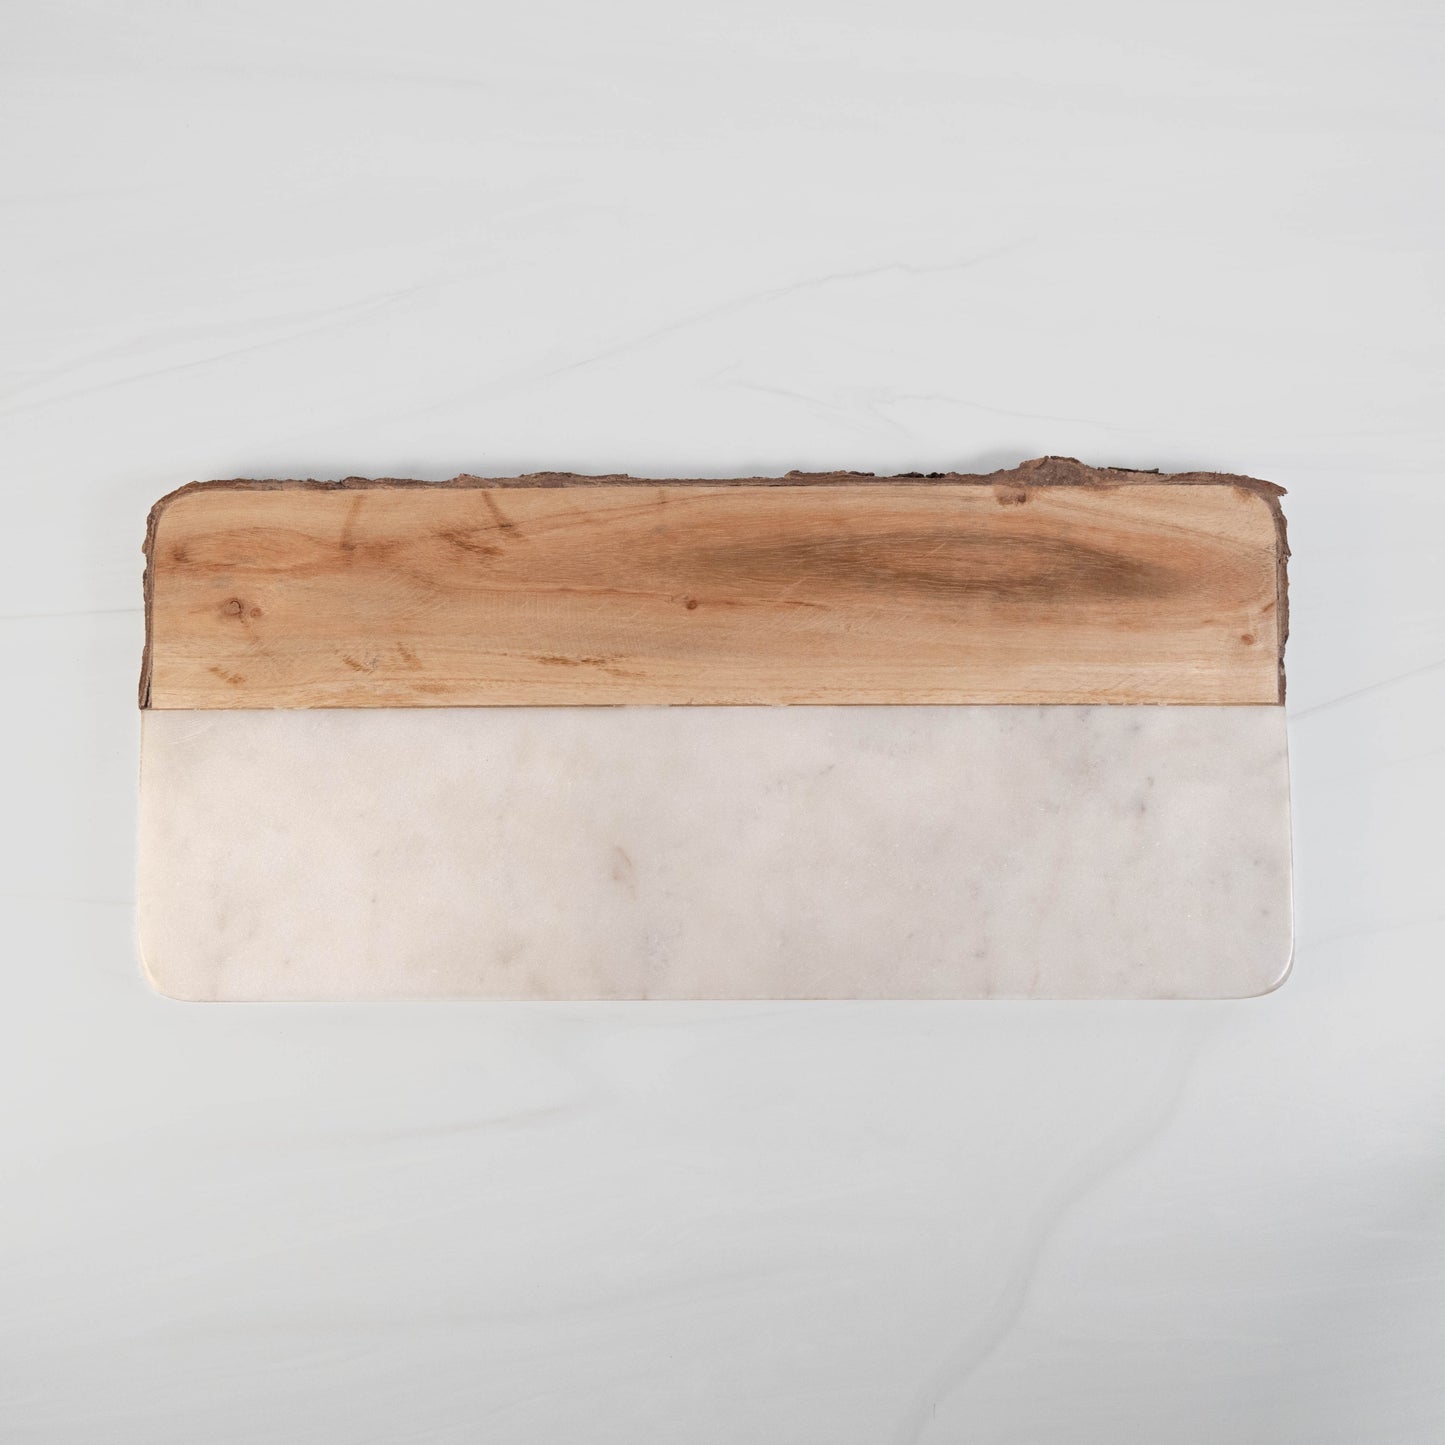 Cheese/Cutting Board with Bark Edge